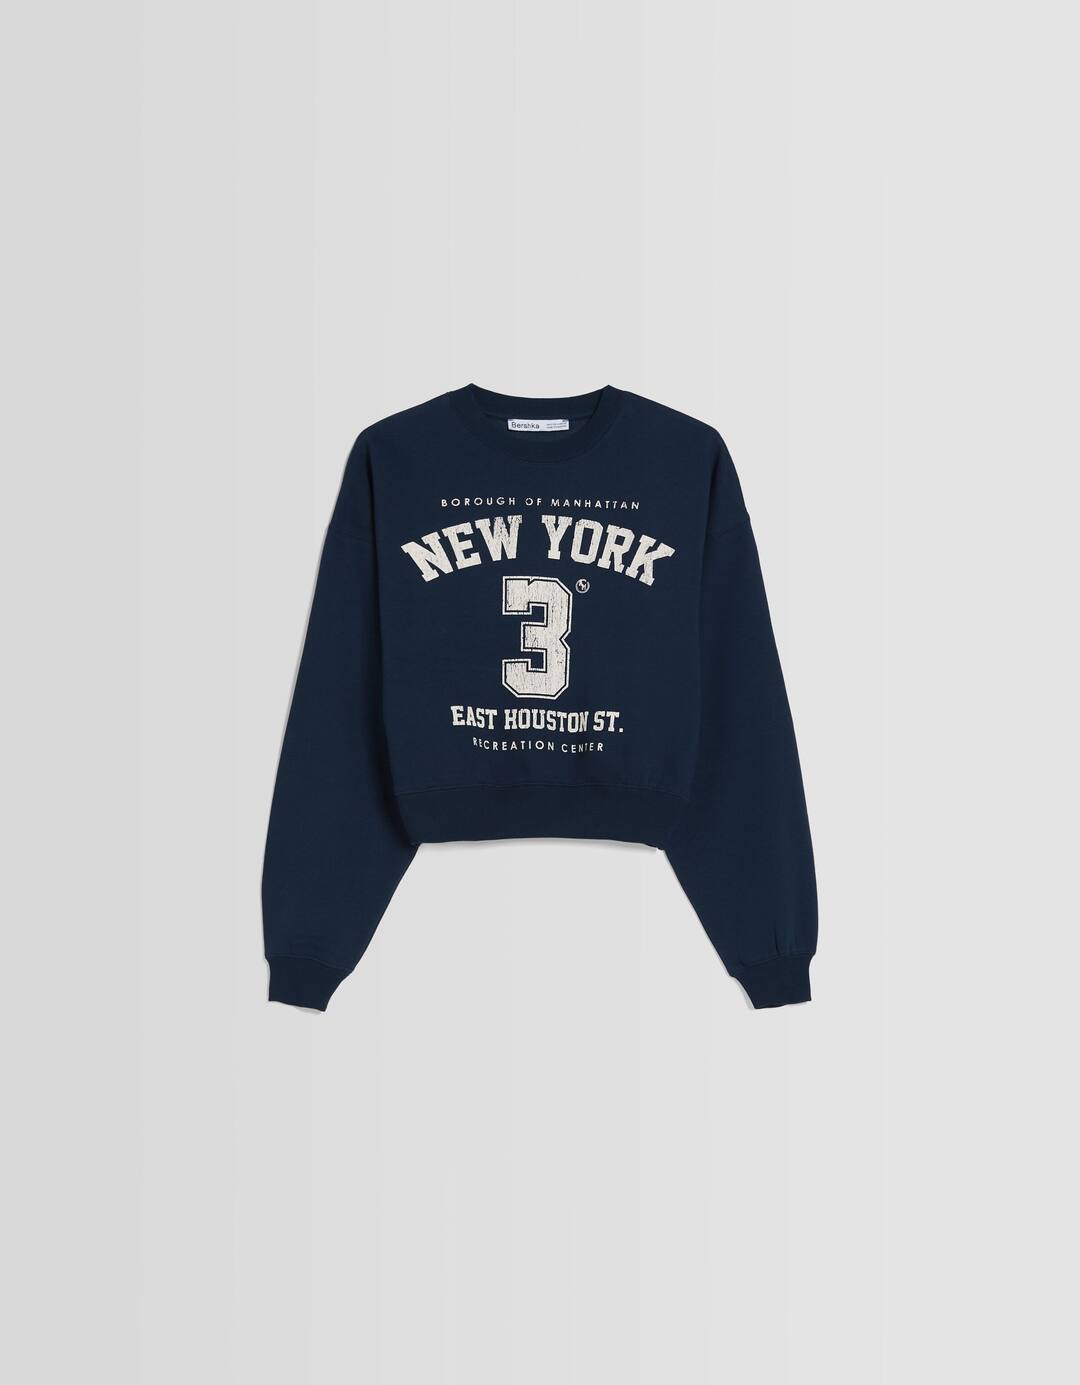 New York printed sweatshirt